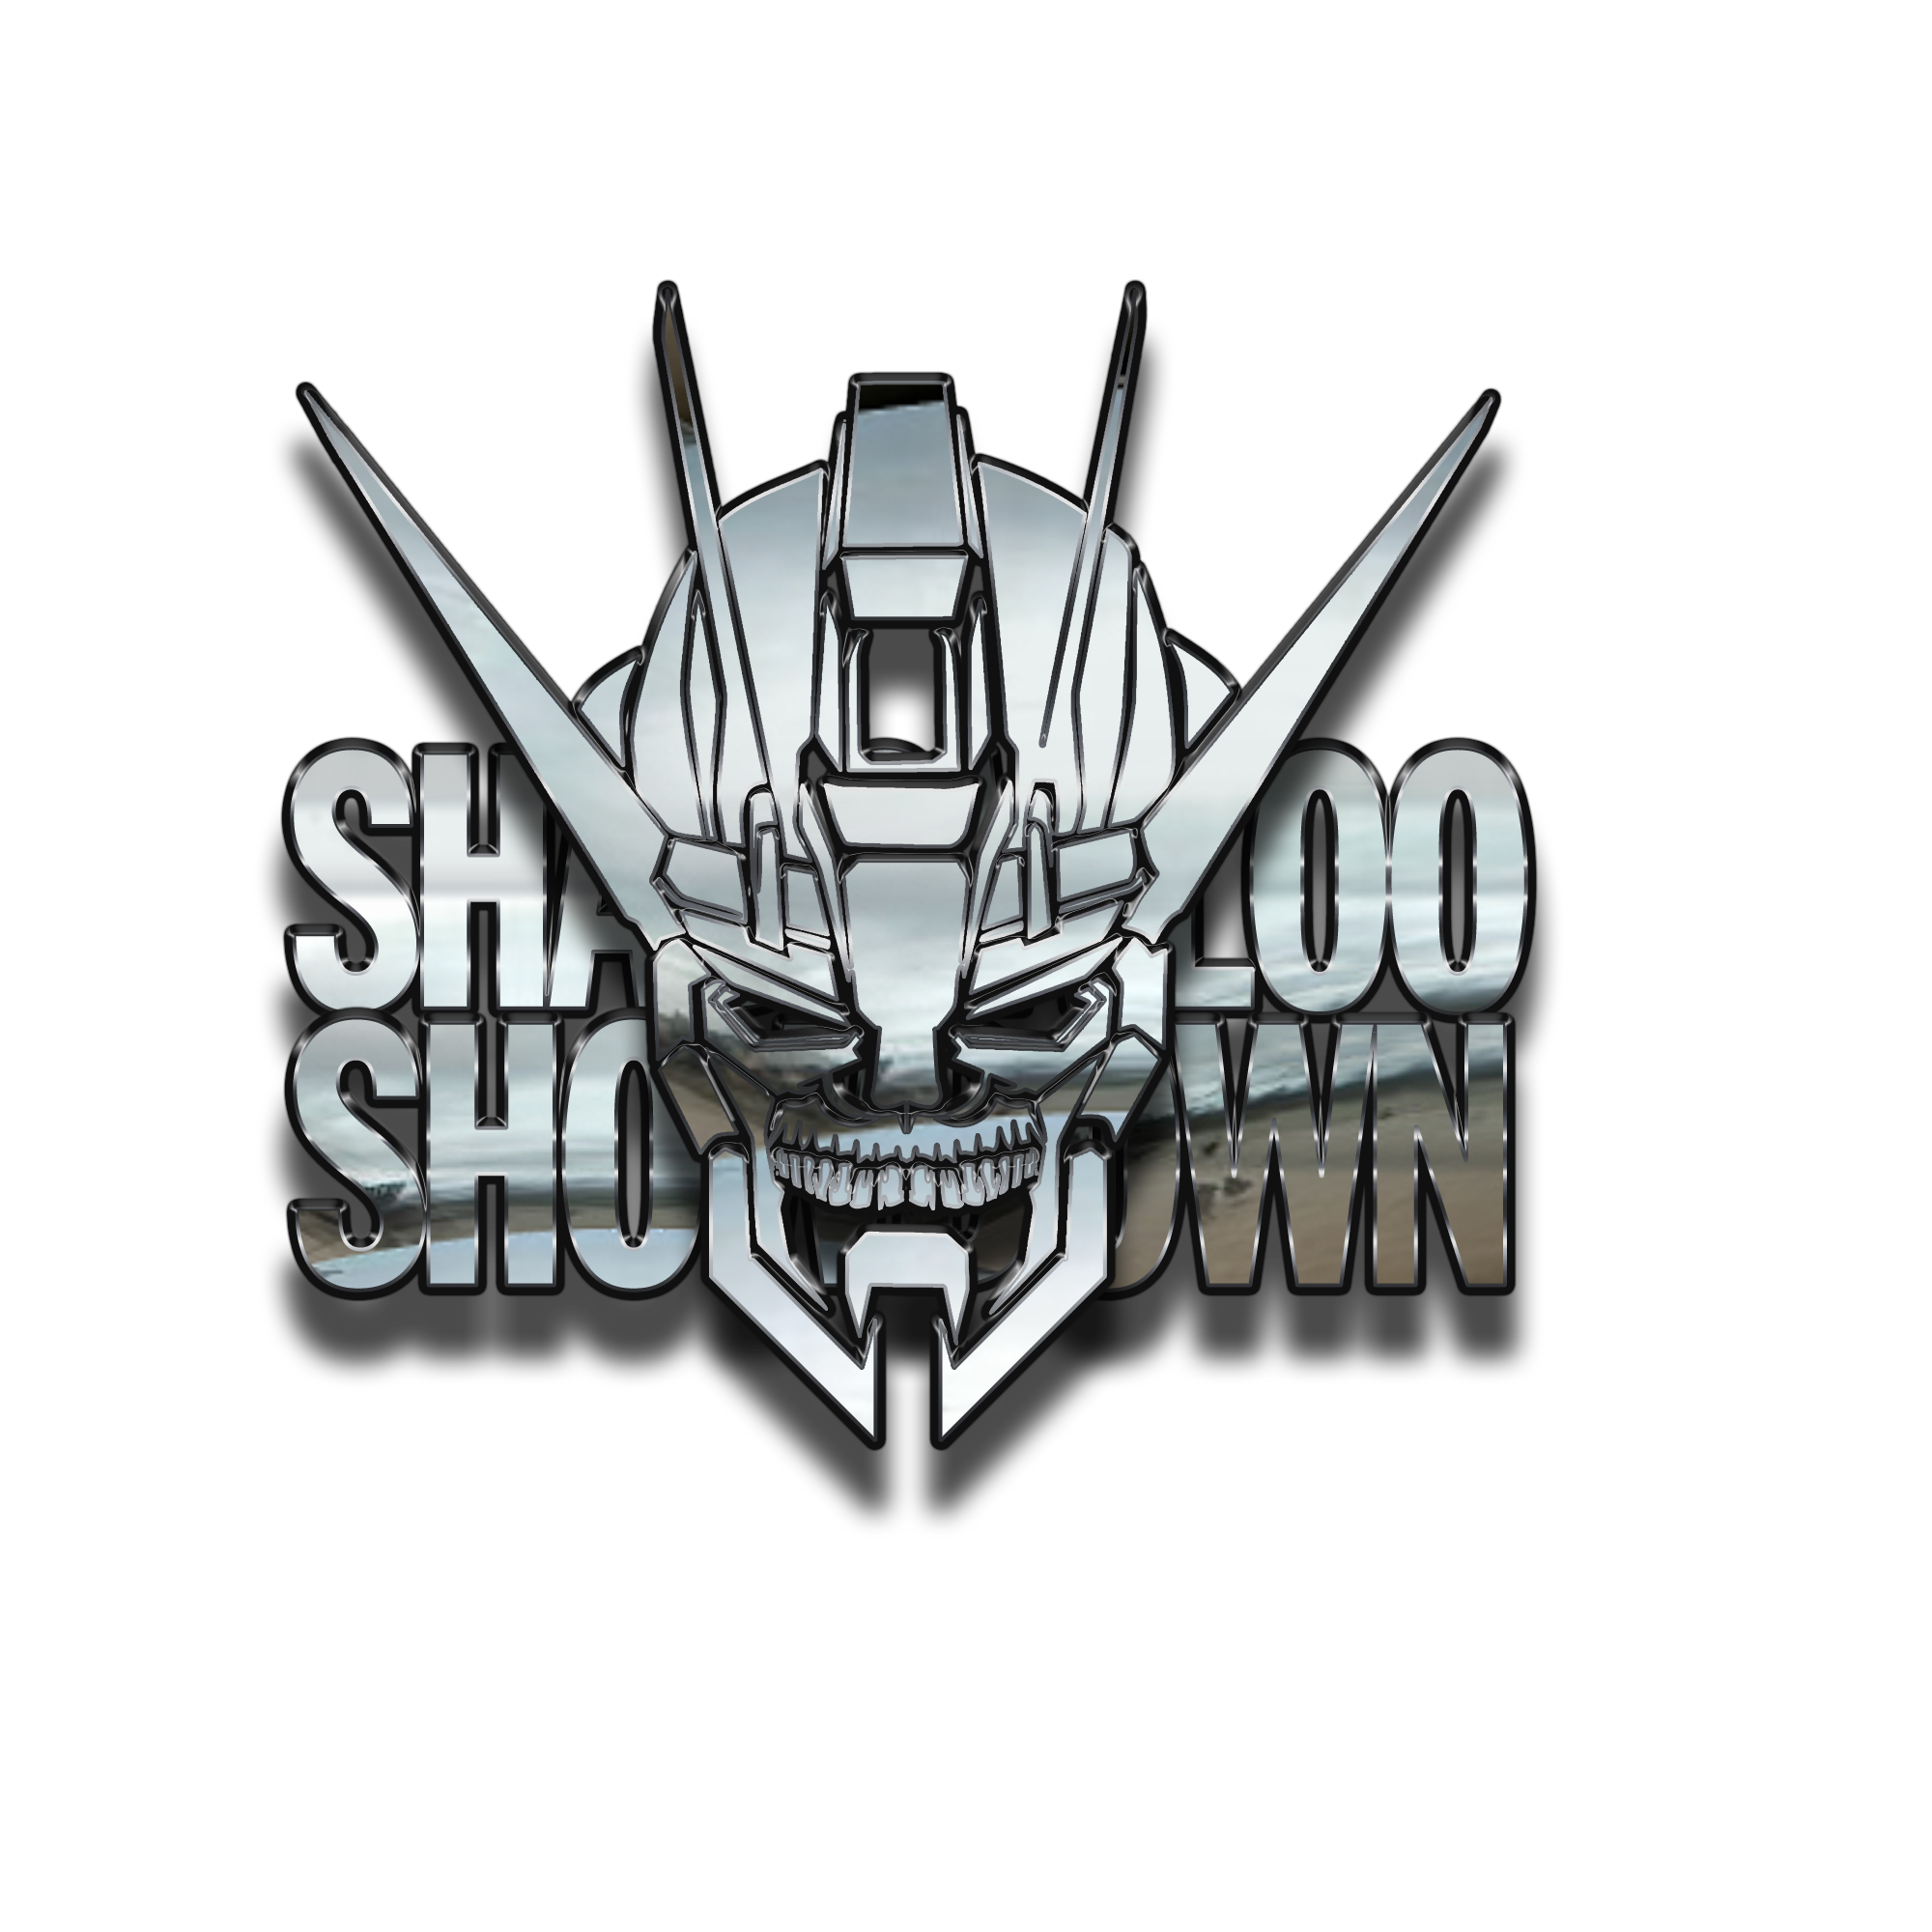 Shadowloo Showdown x World Game Cup